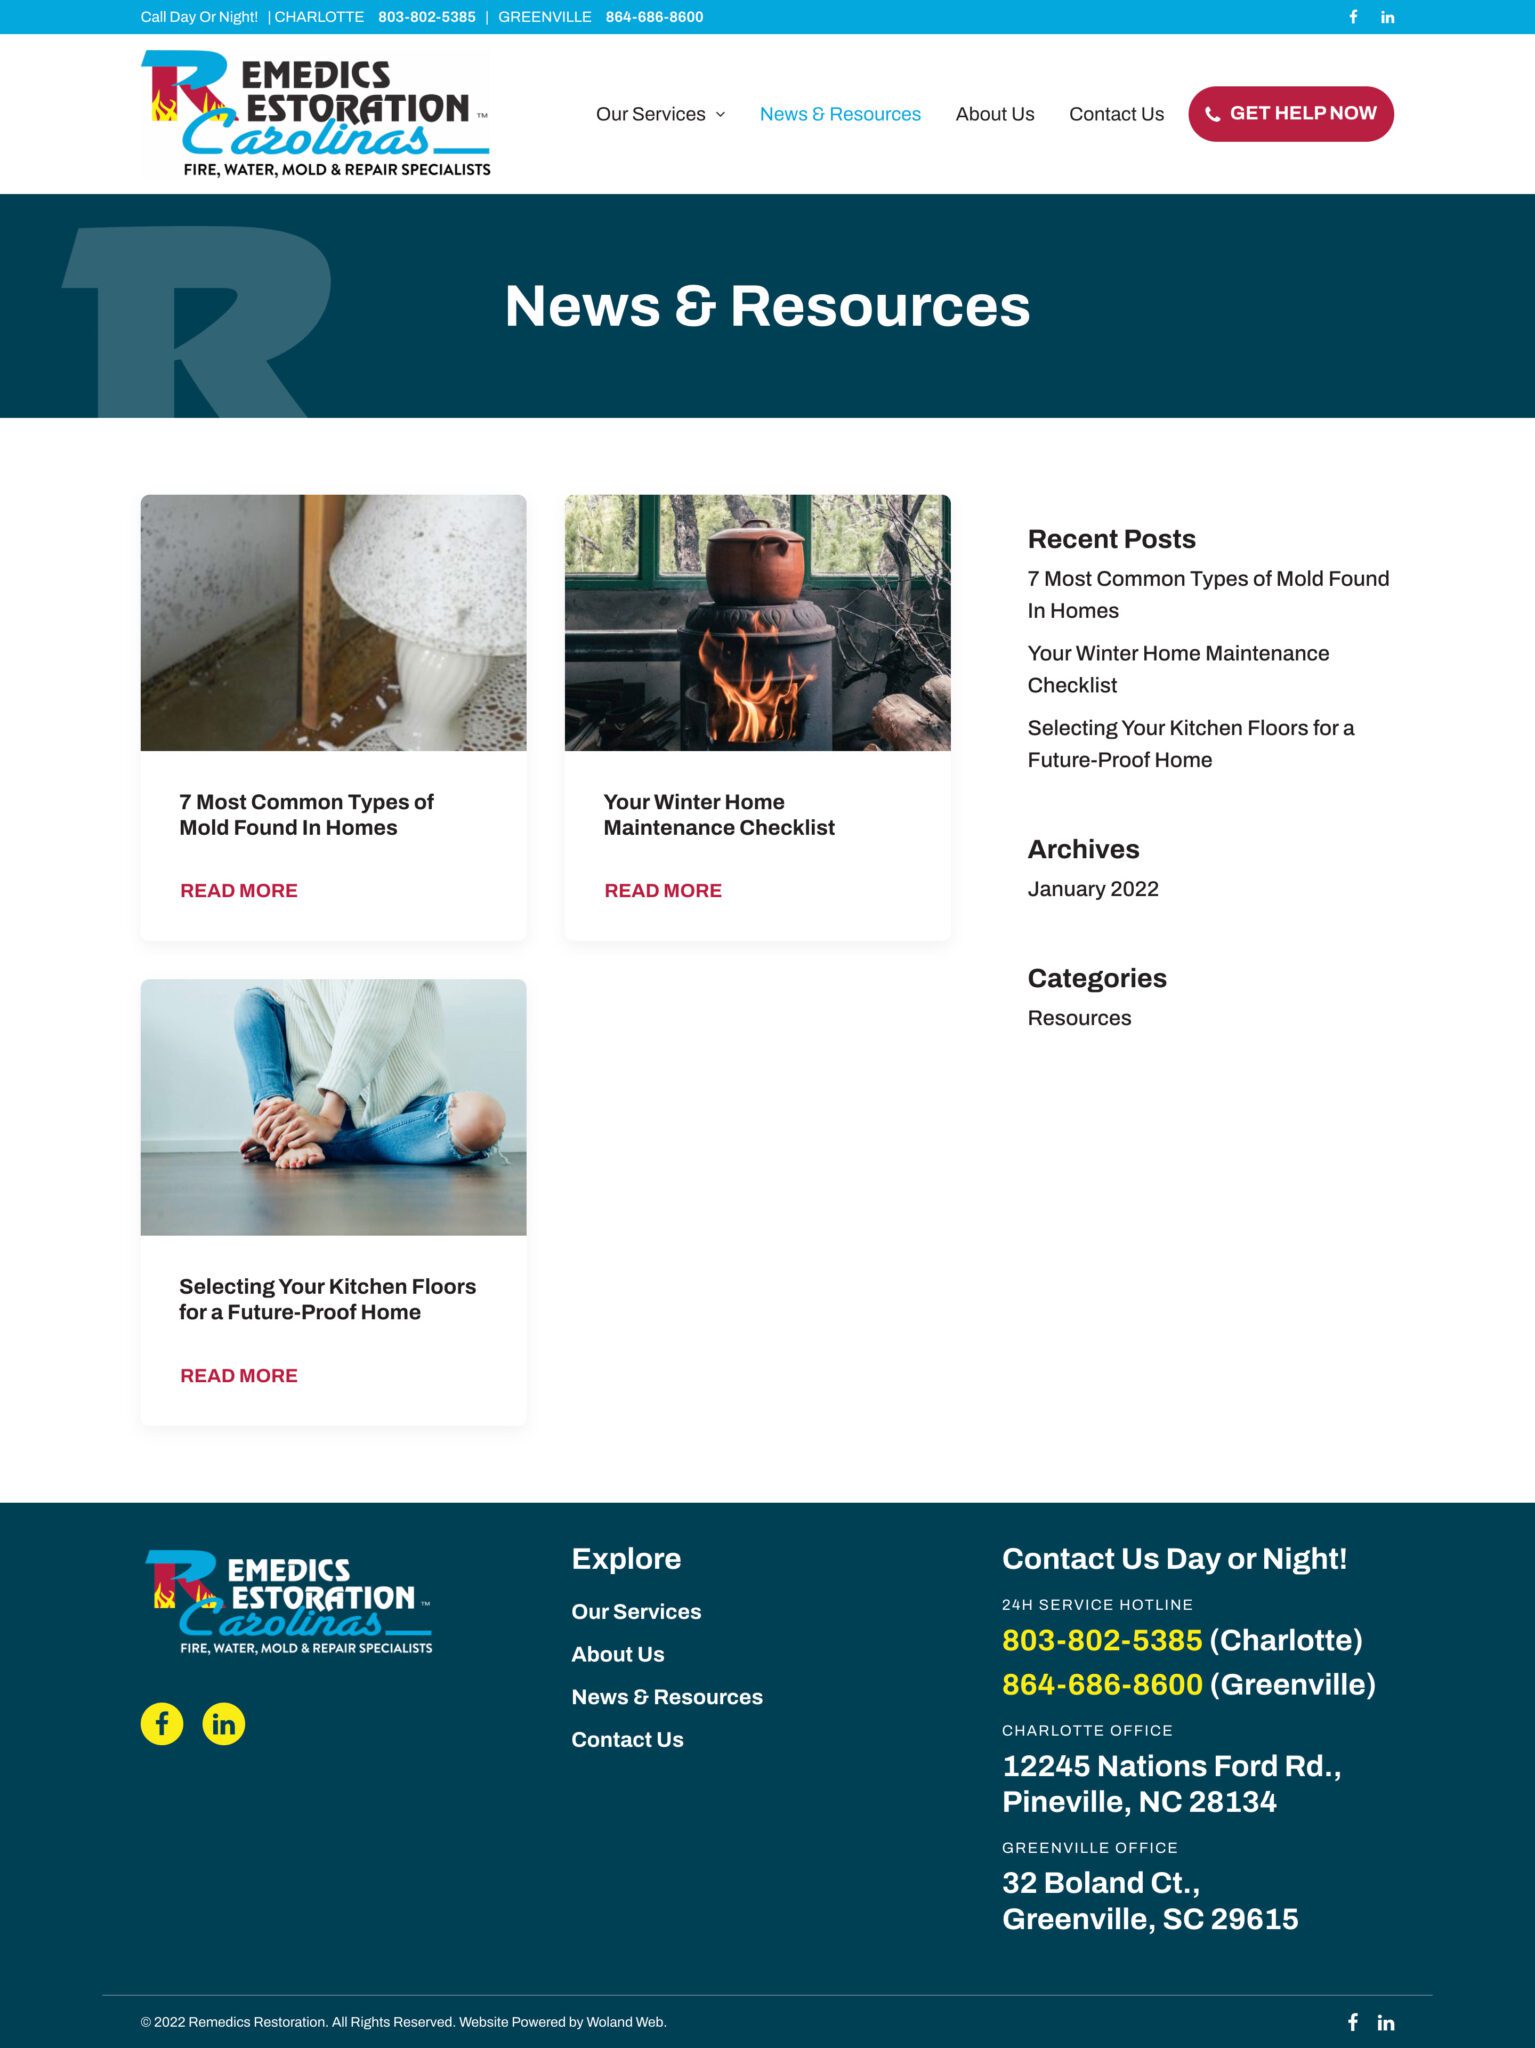 Remedics Restoration website news page screenshot